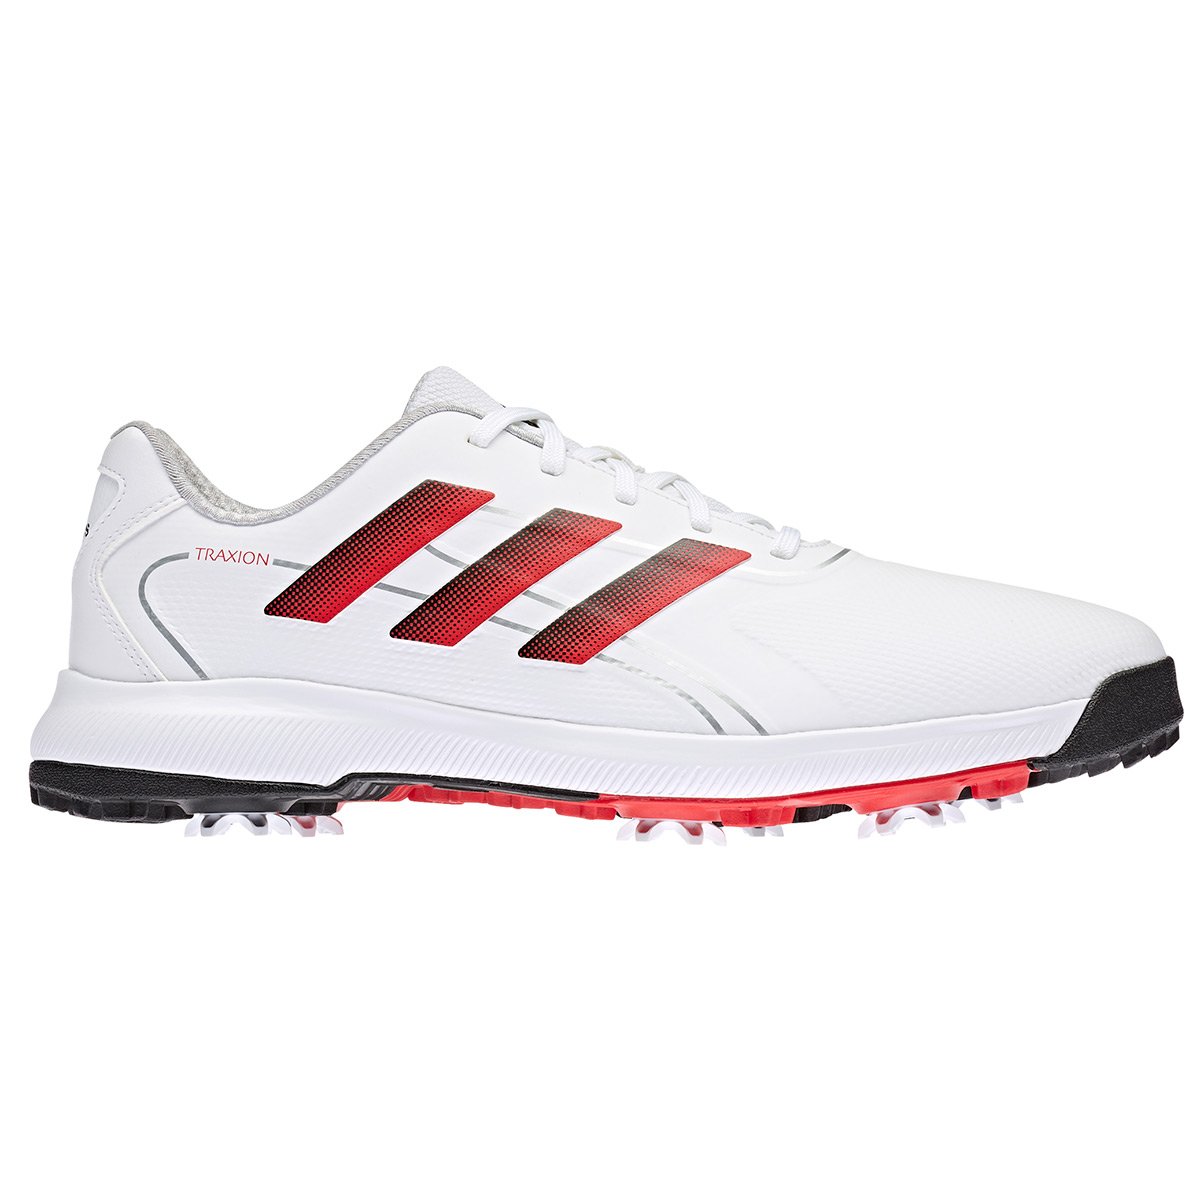 adidas Golf Men's Traxion Lite Max Golf Shoes - White, Red & Black